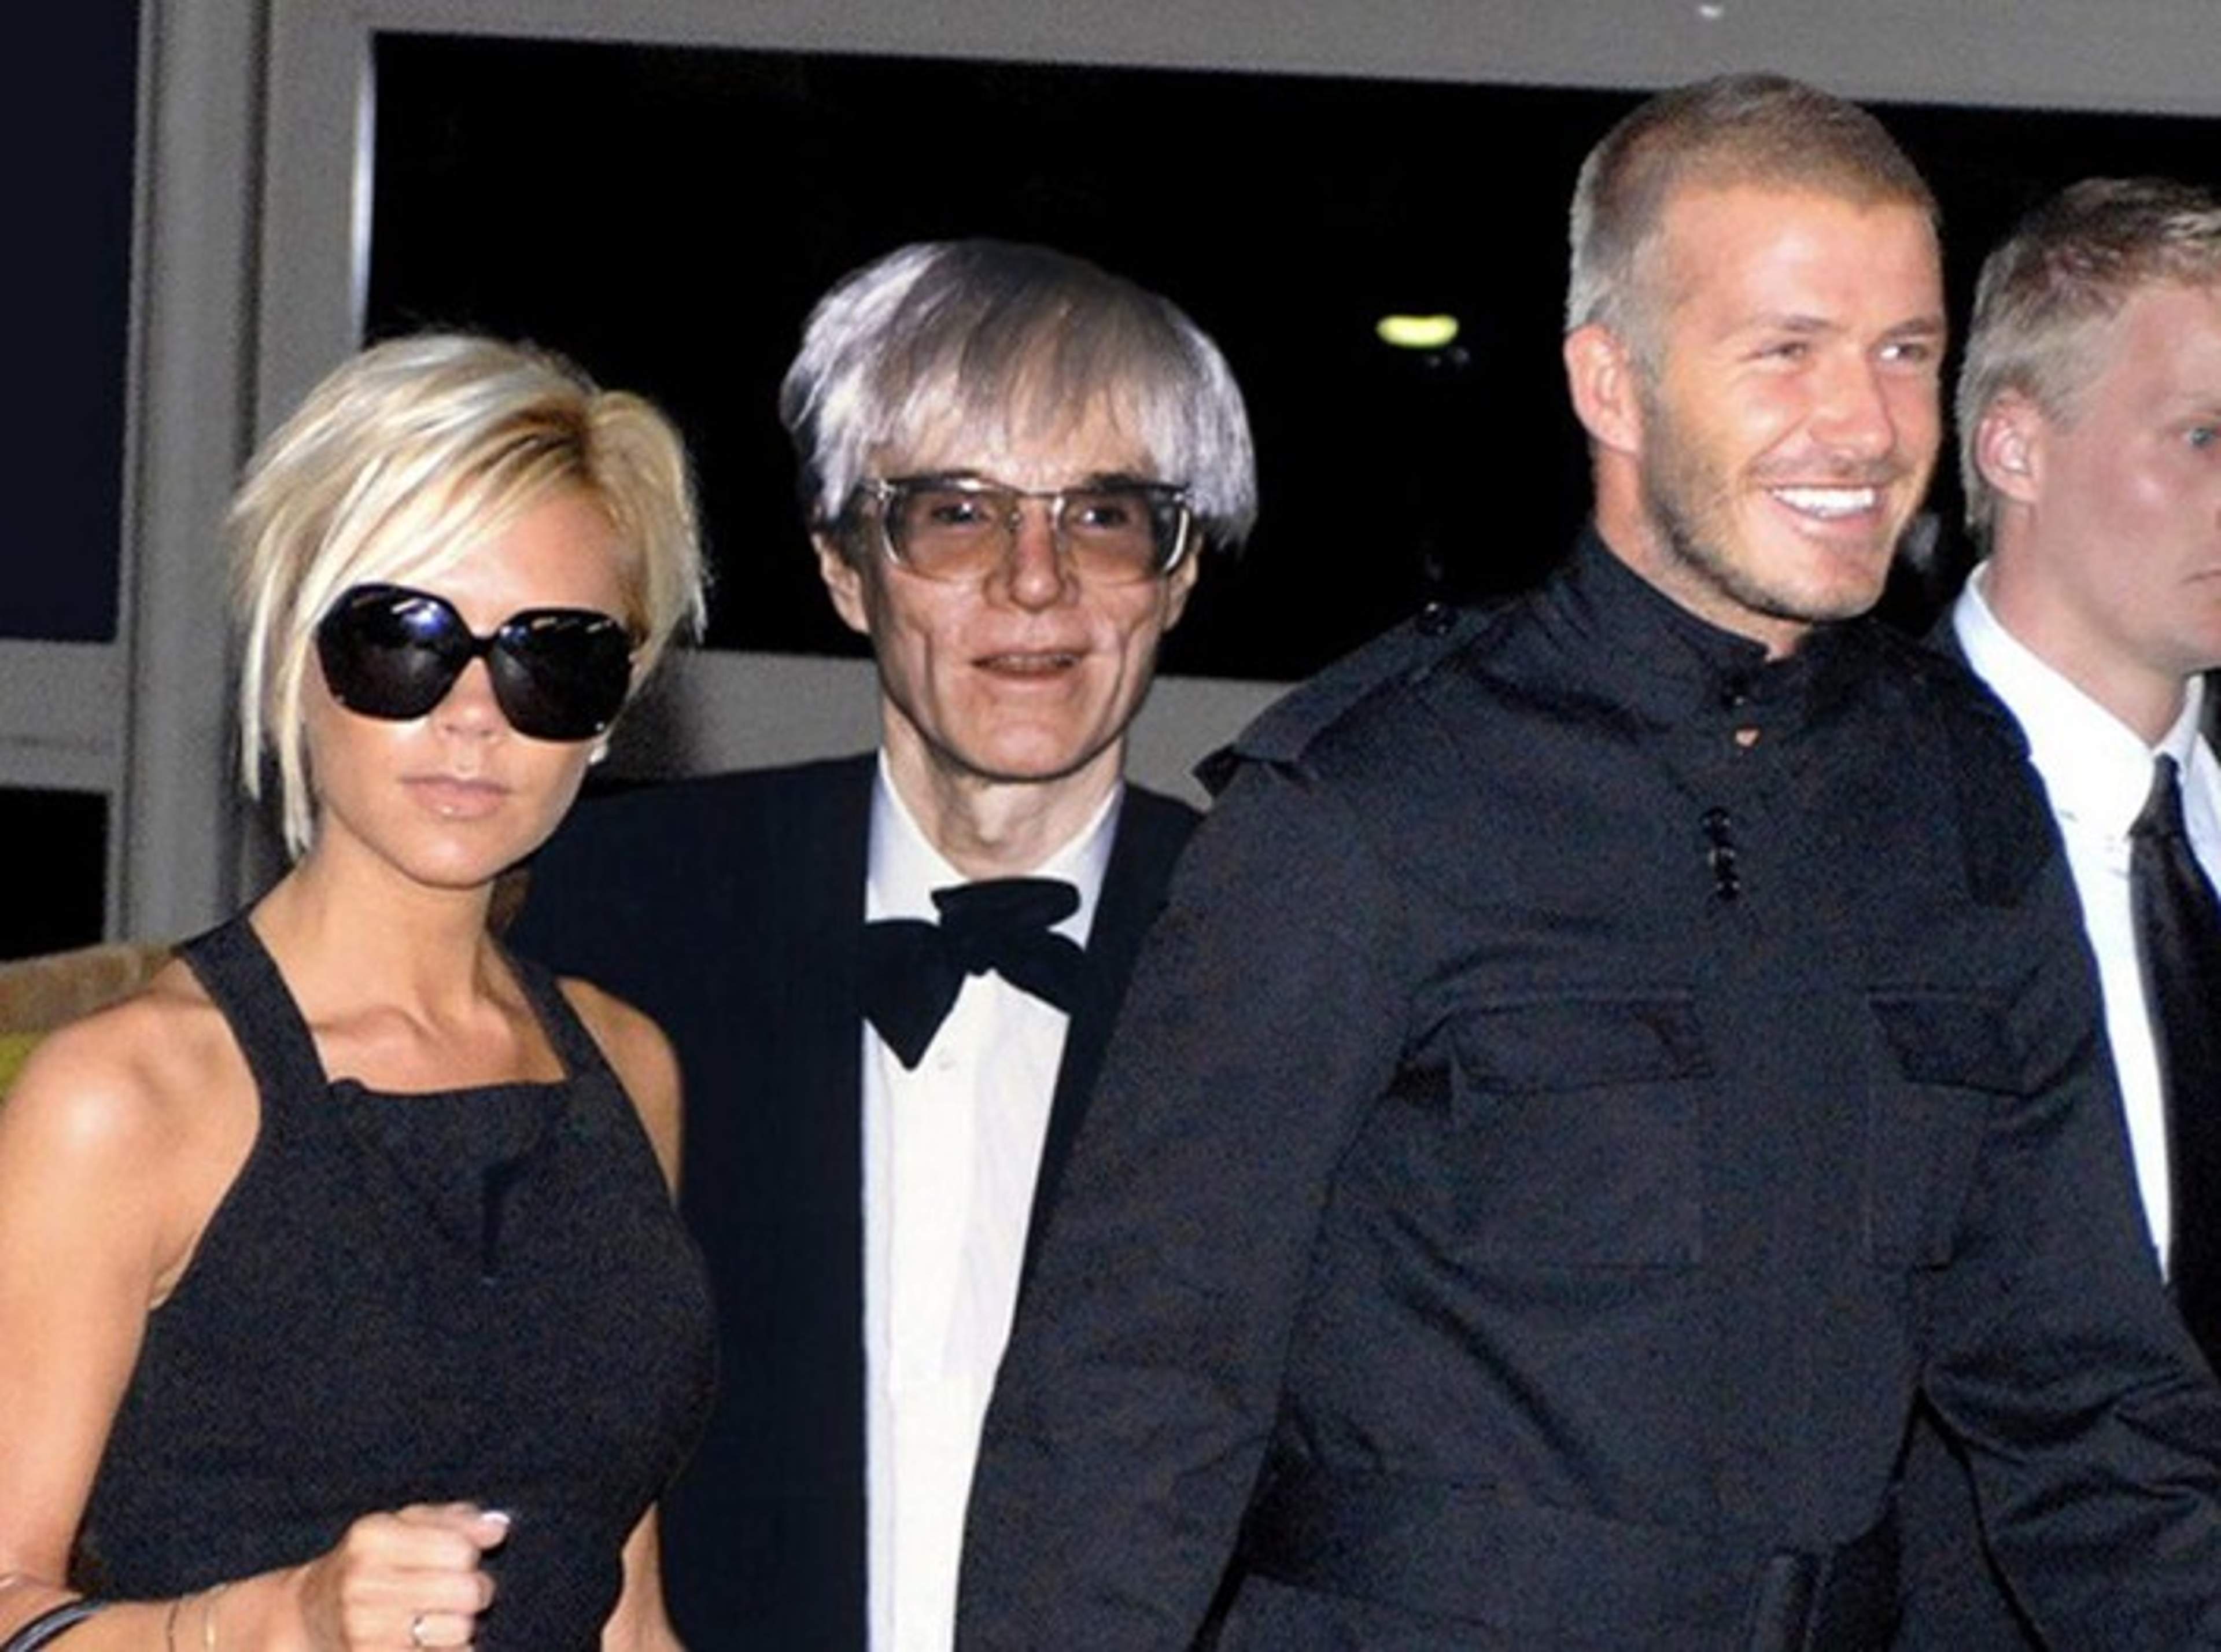 Andy Warhol and the Beckhams